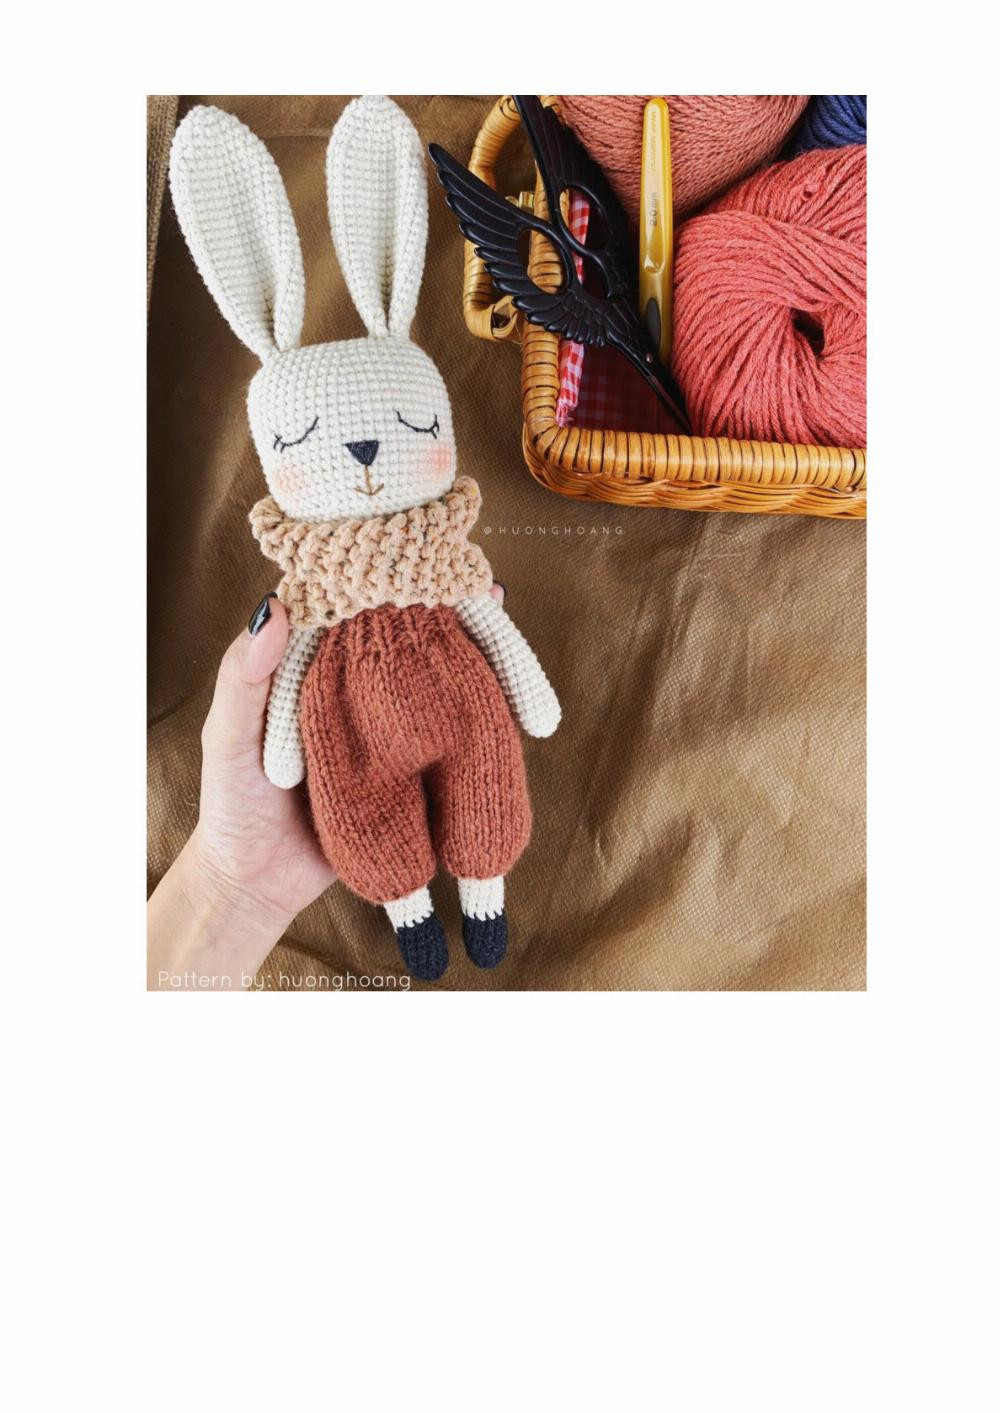 lily the bunny crochet pattern